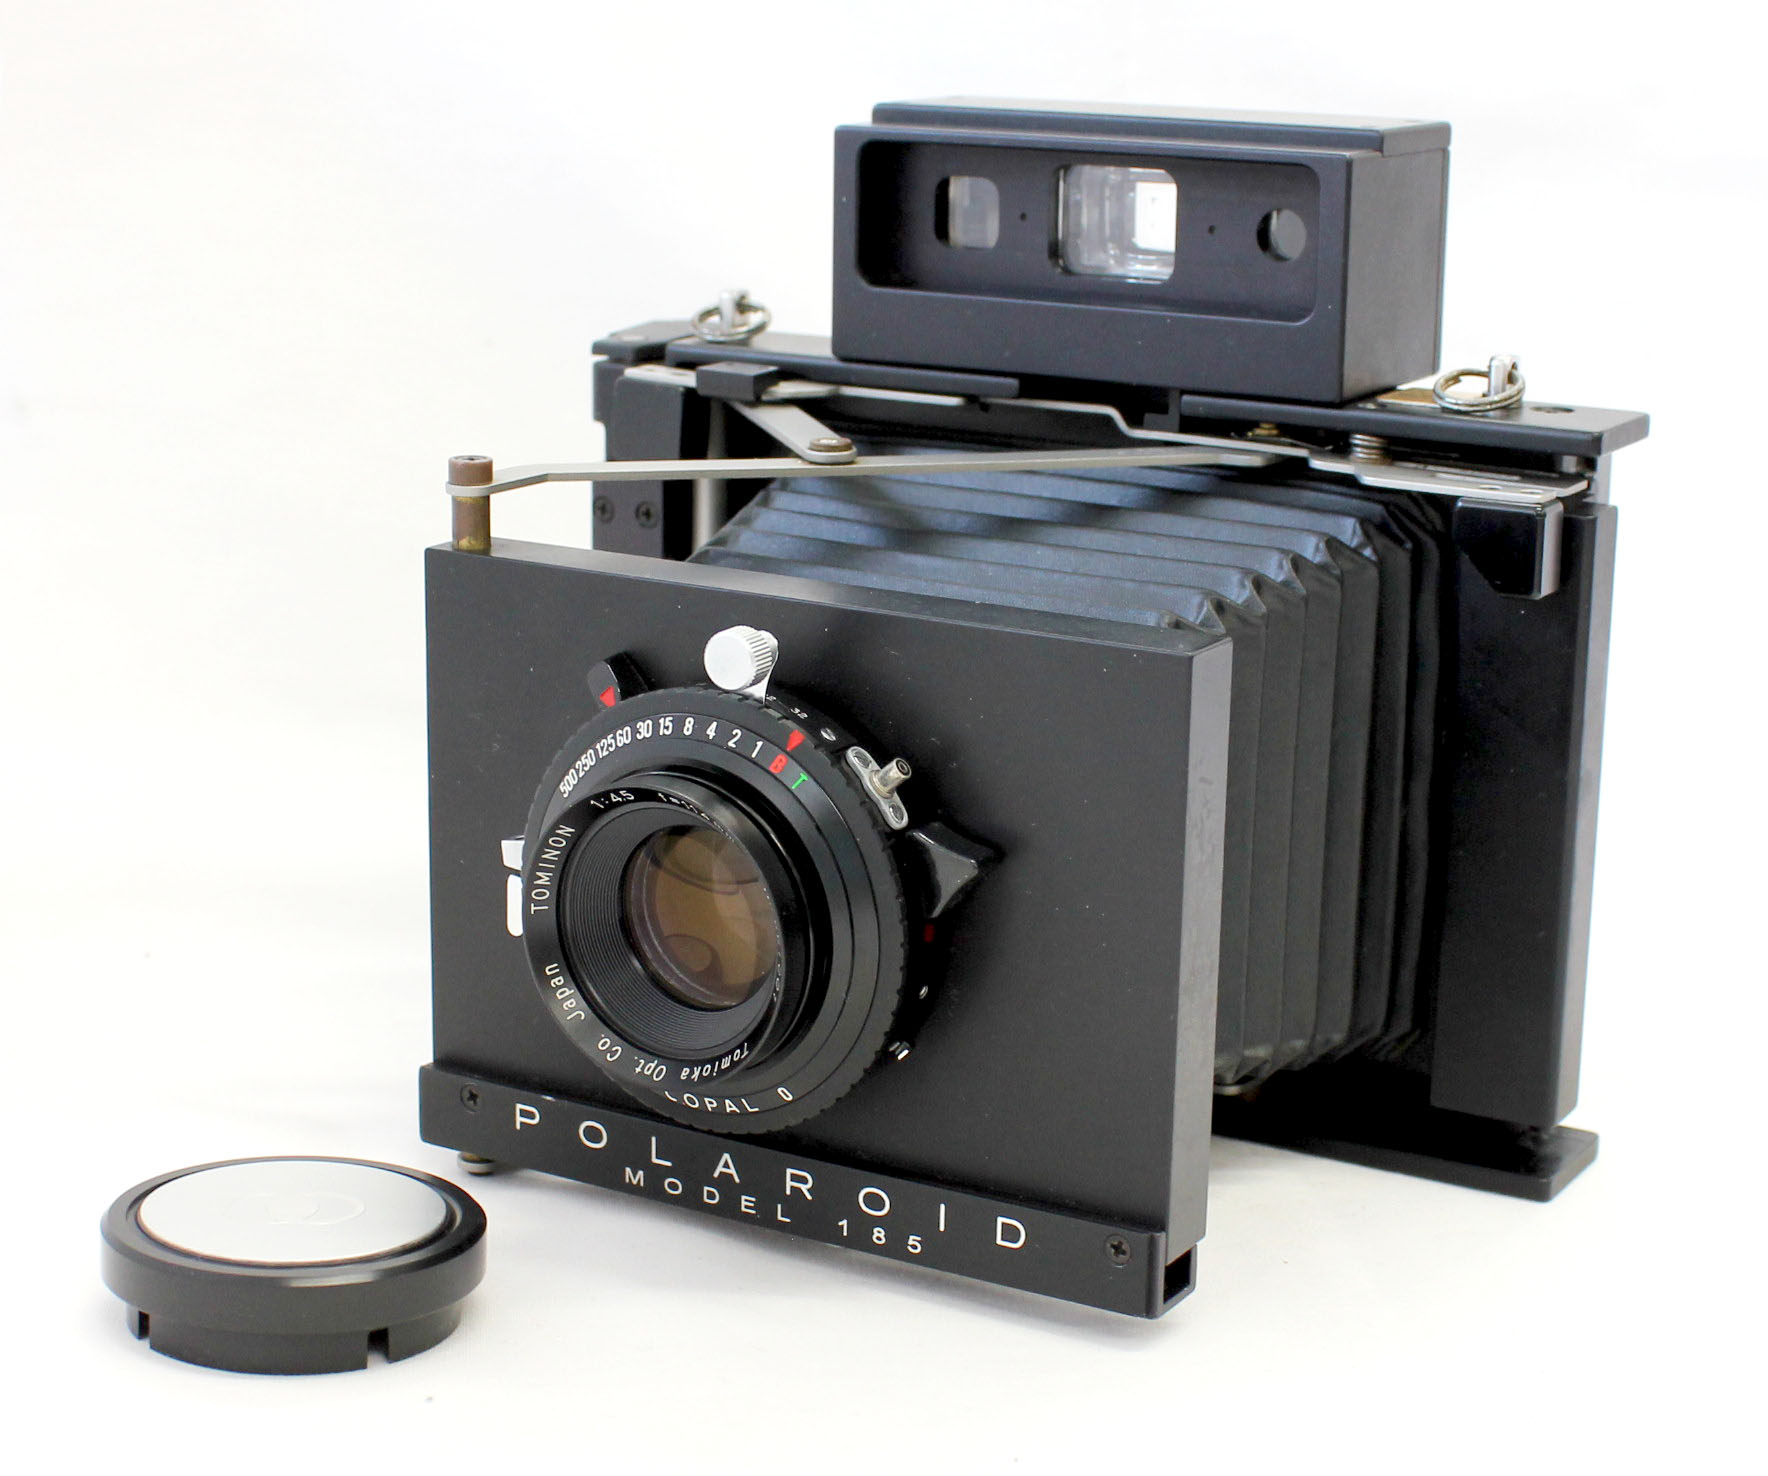 Japan Used Camera Shop | [Near Mint] Polaroid Land Camera Model 185 Millennium (2000) Japan Limited Model w/ Tominon 114mm F/4.5